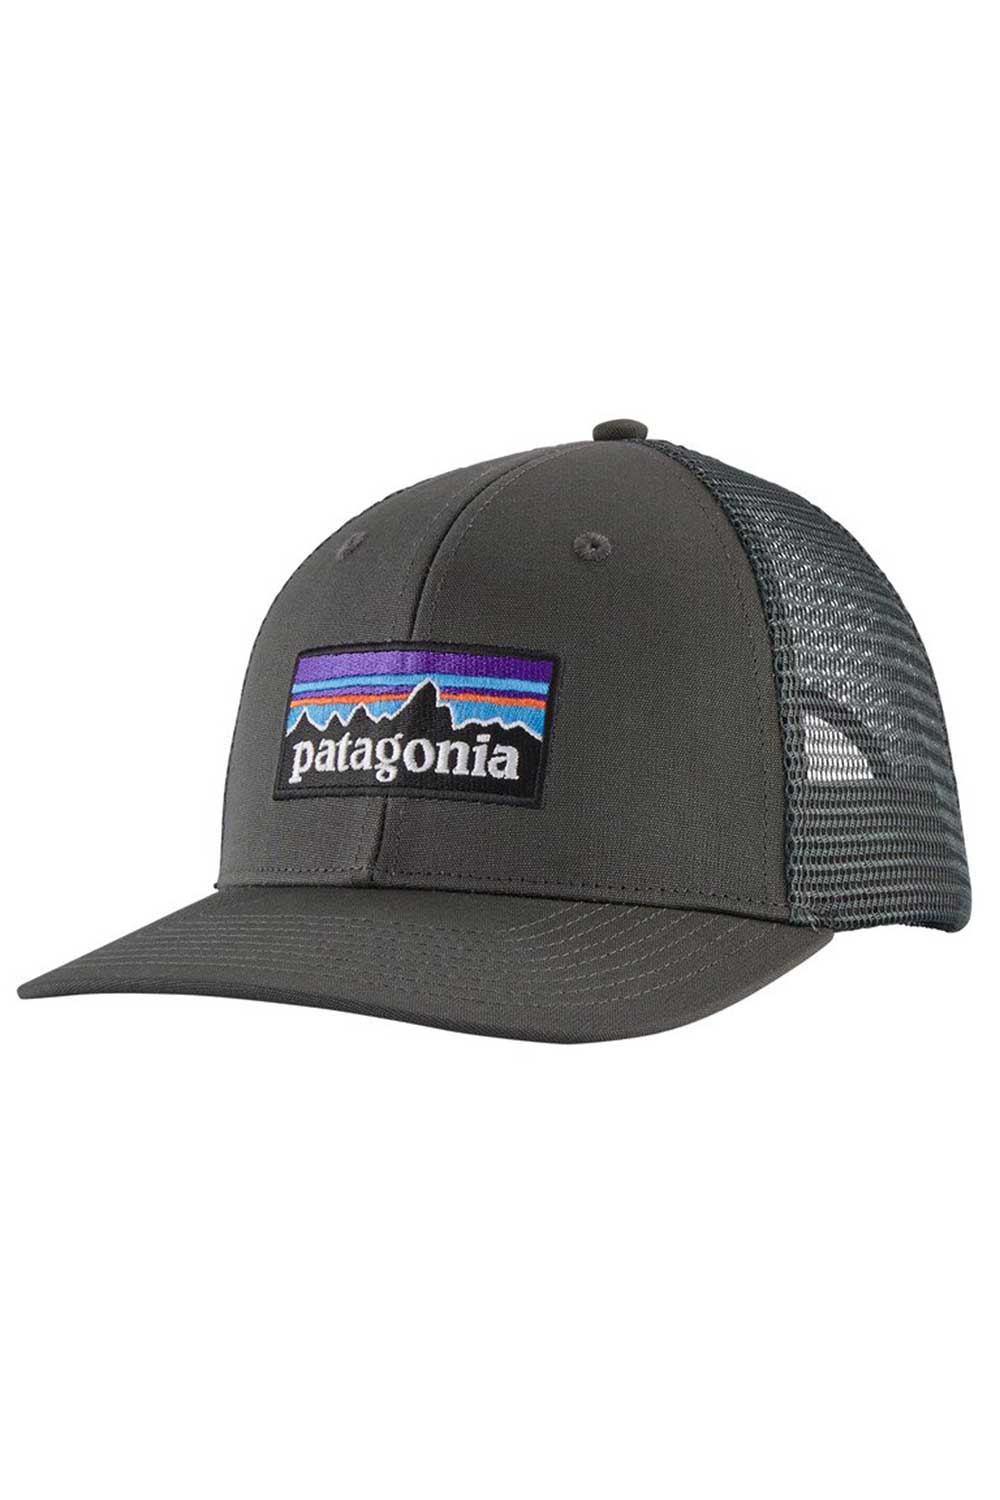 Patagonia Men's P6 Logo Trucker Hat in Forge Grey